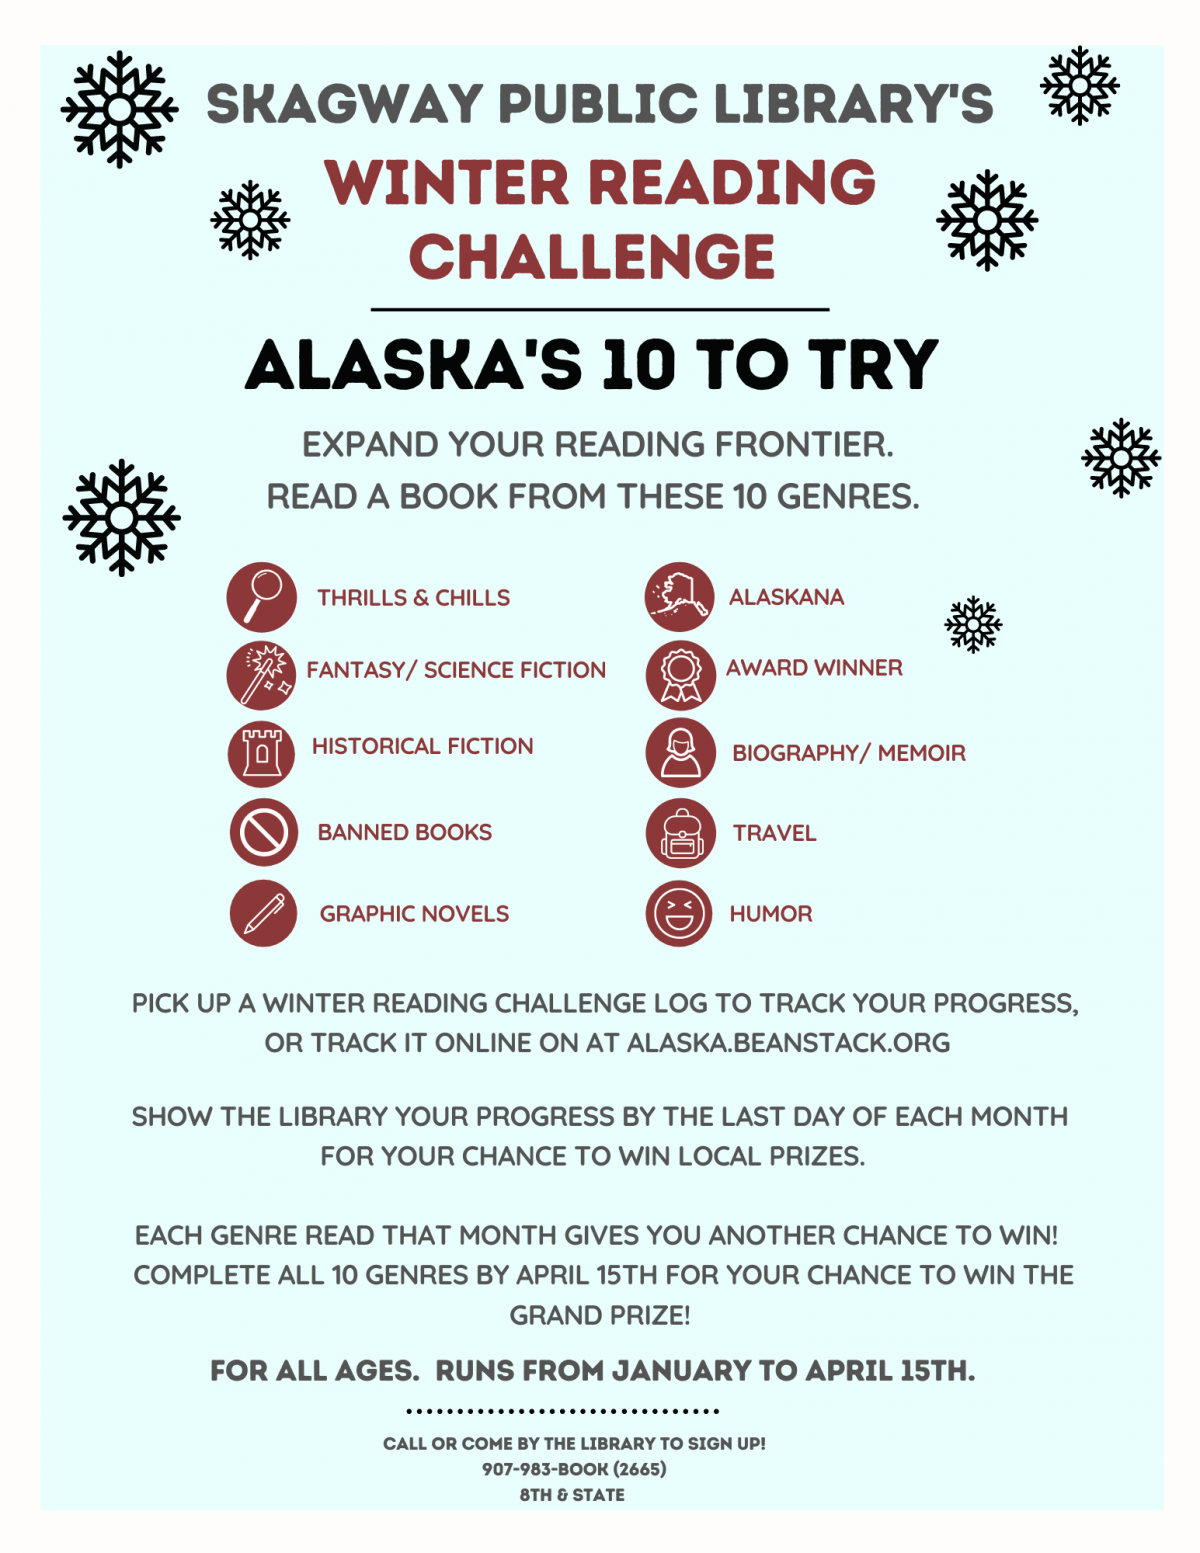 Winter Reading Challenge: Alaska's 10 to Try!